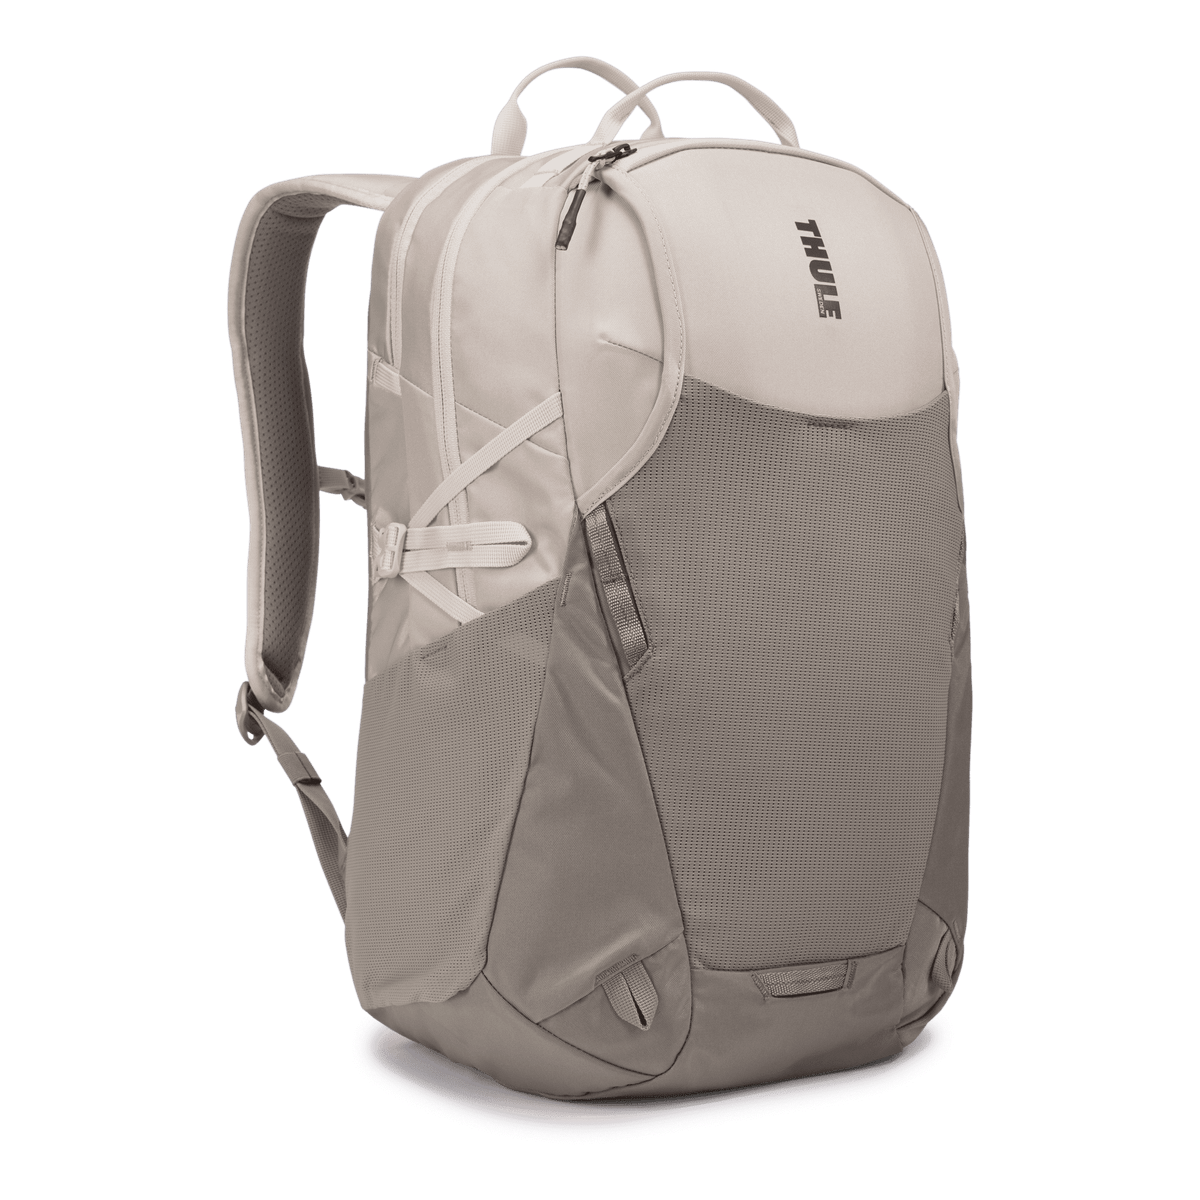 Thule EnRoute backpack 26L pelican gray/vetiver gray